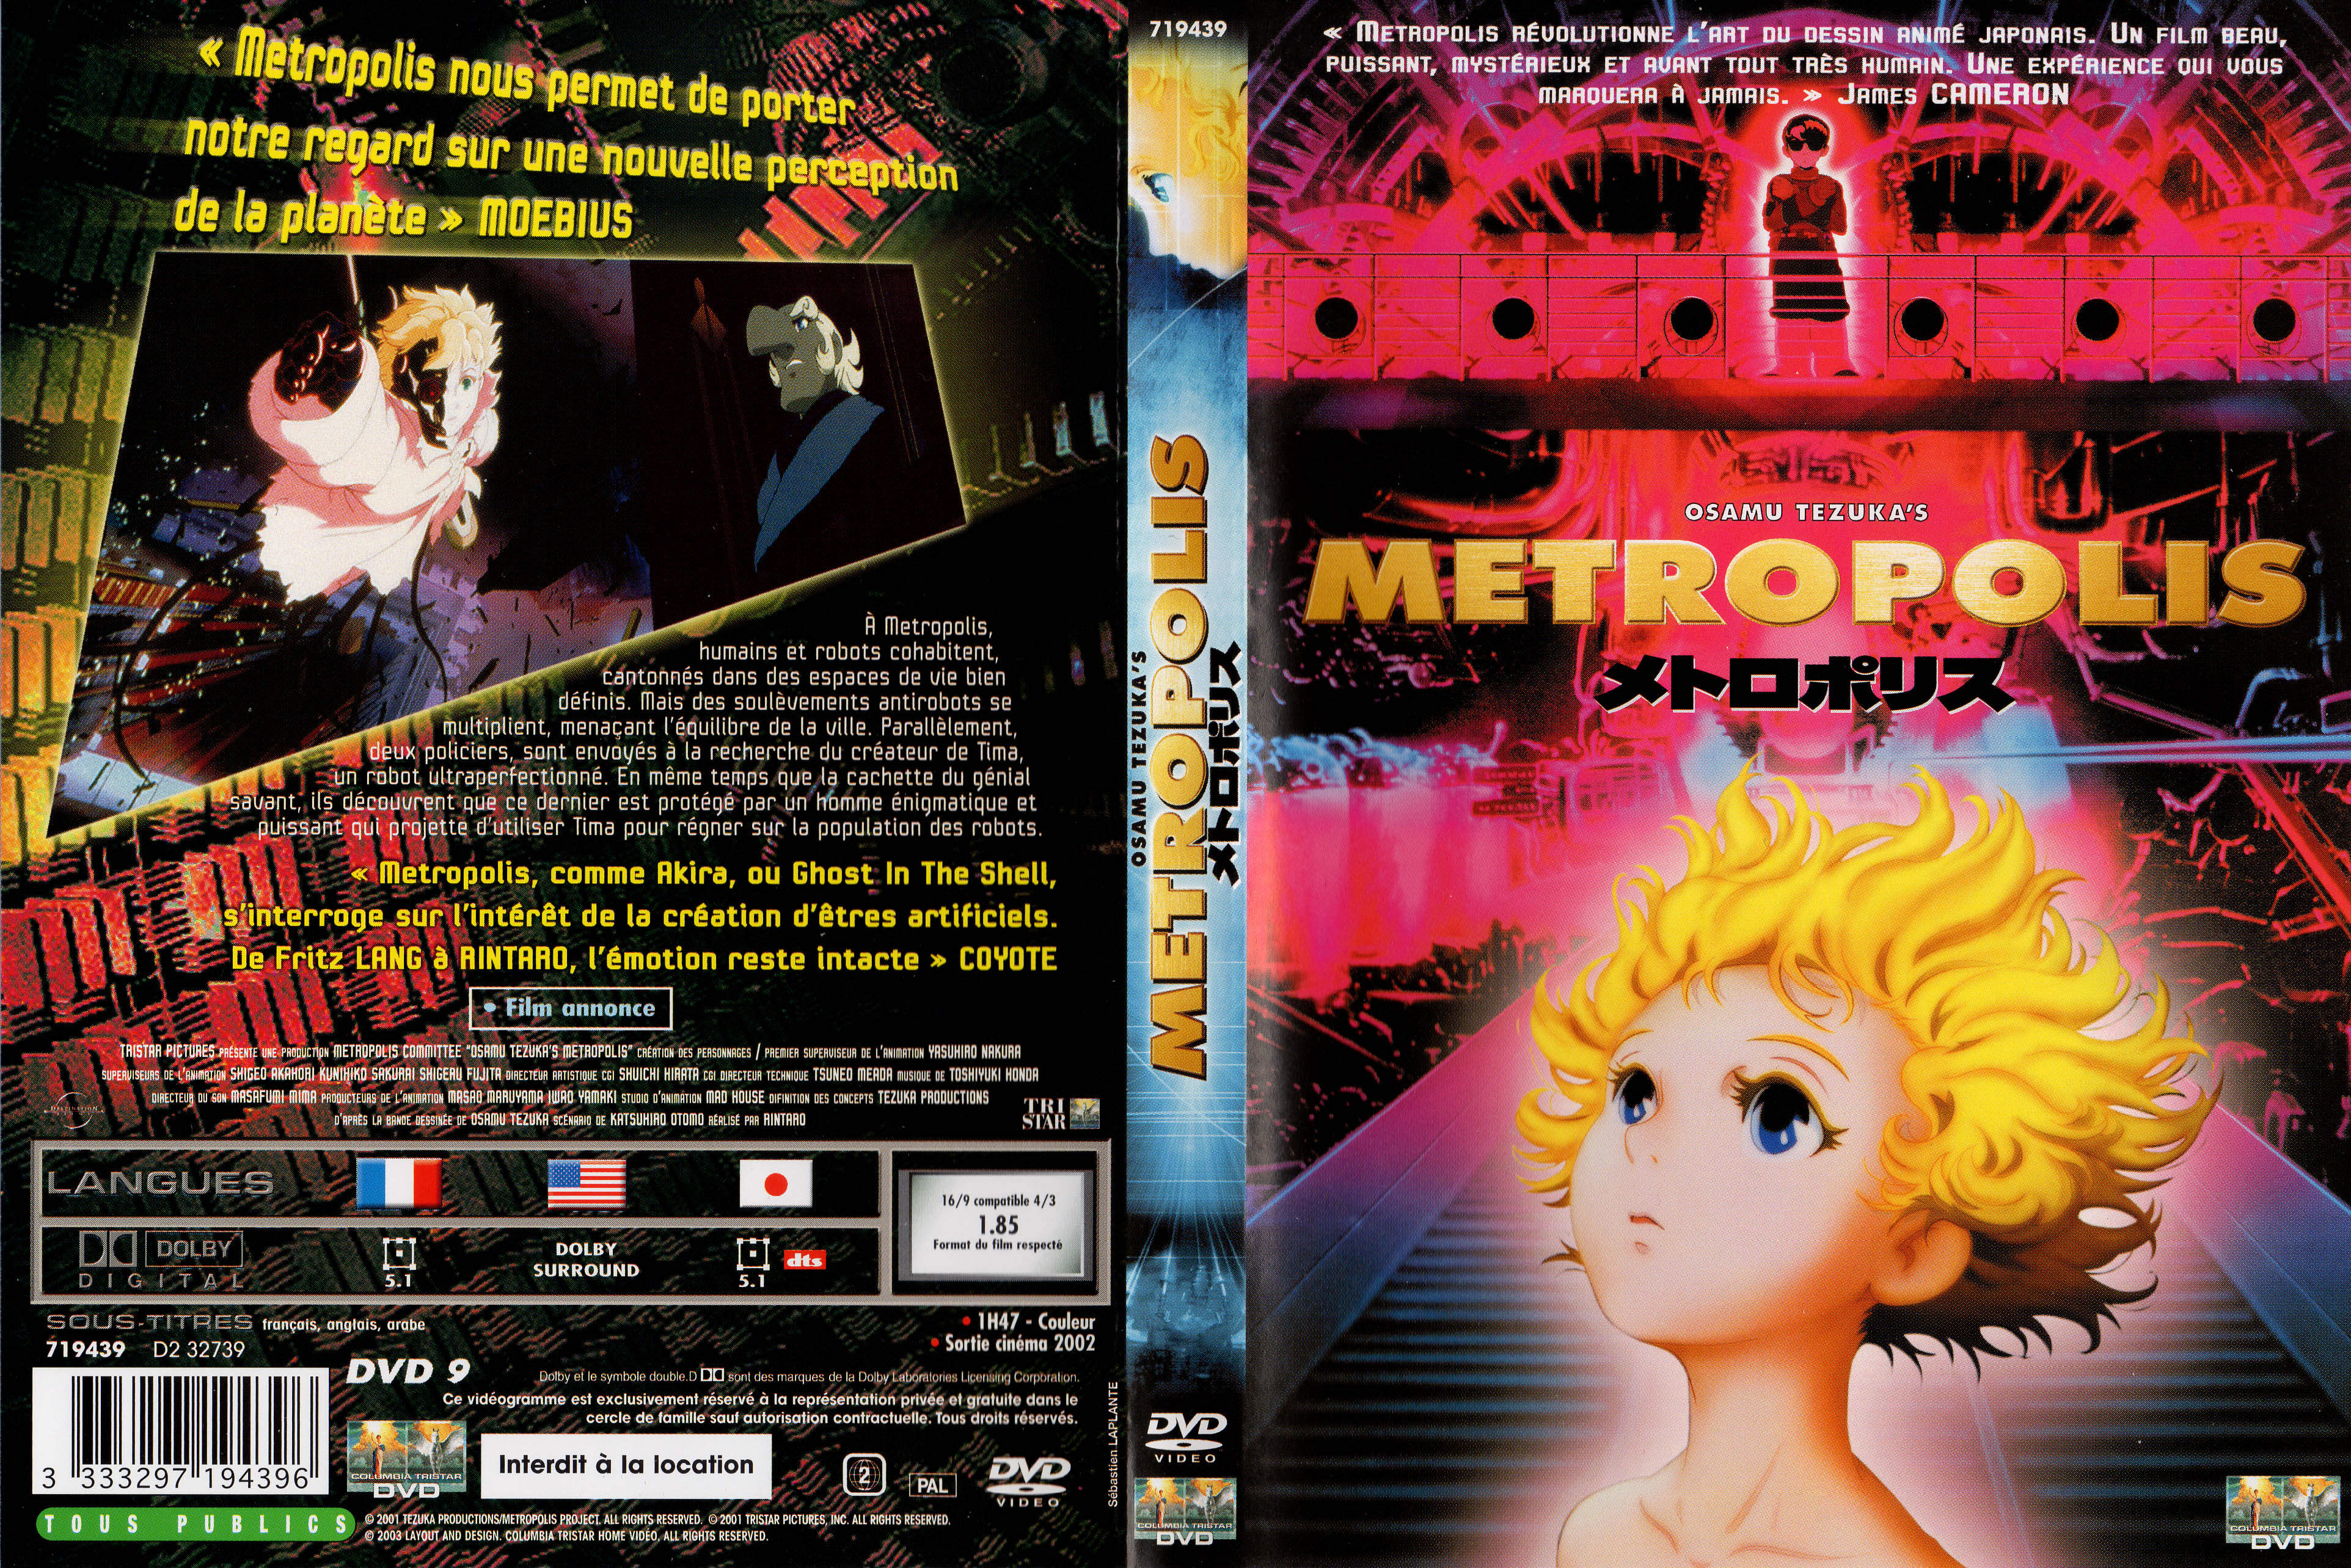 Jaquette DVD Metropolis v4